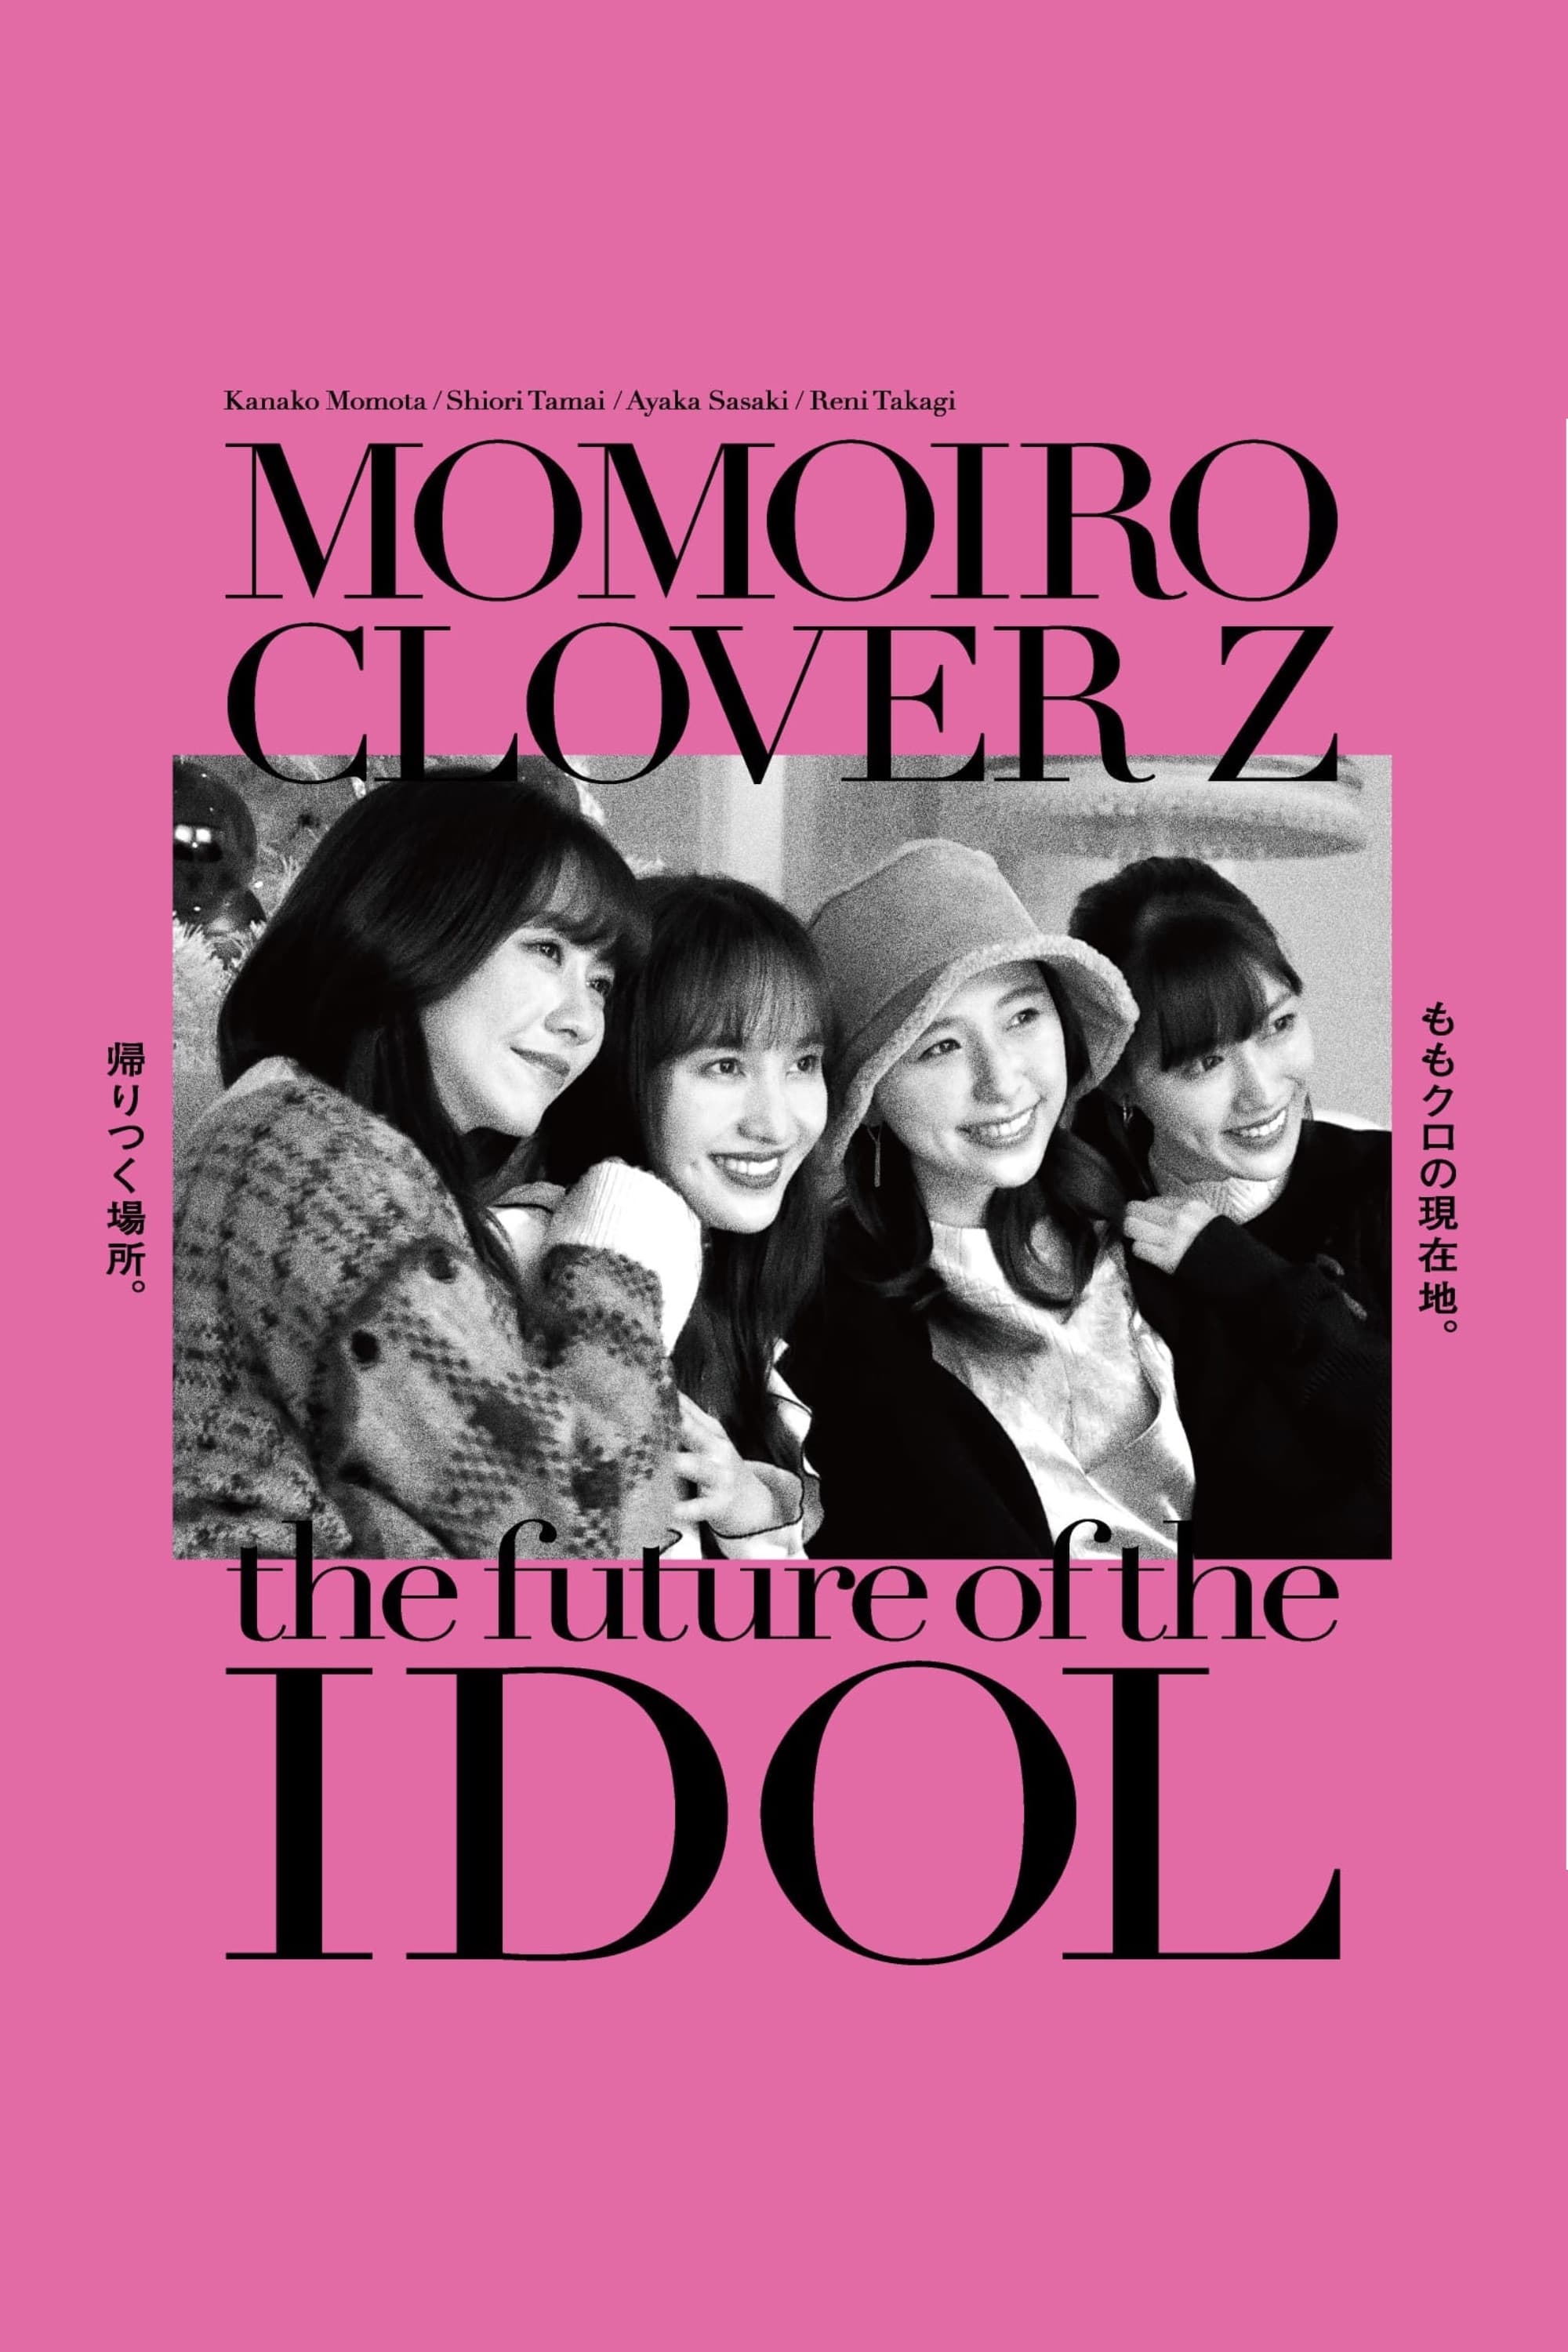 Momoiro Clover Z -the future of IDOL-